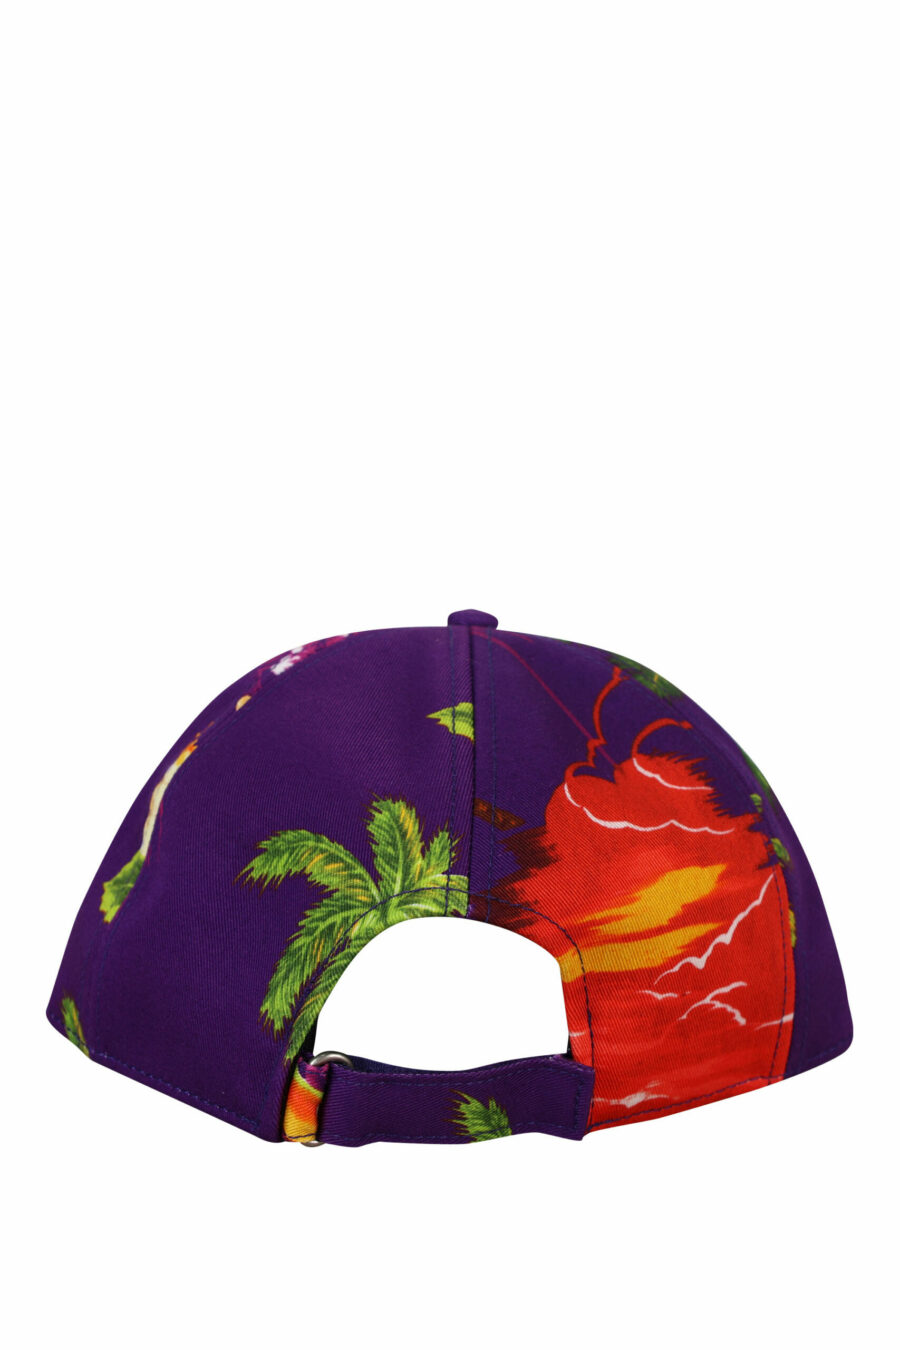 Multicoloured palm tree cap - 8057151141825 1 scaled